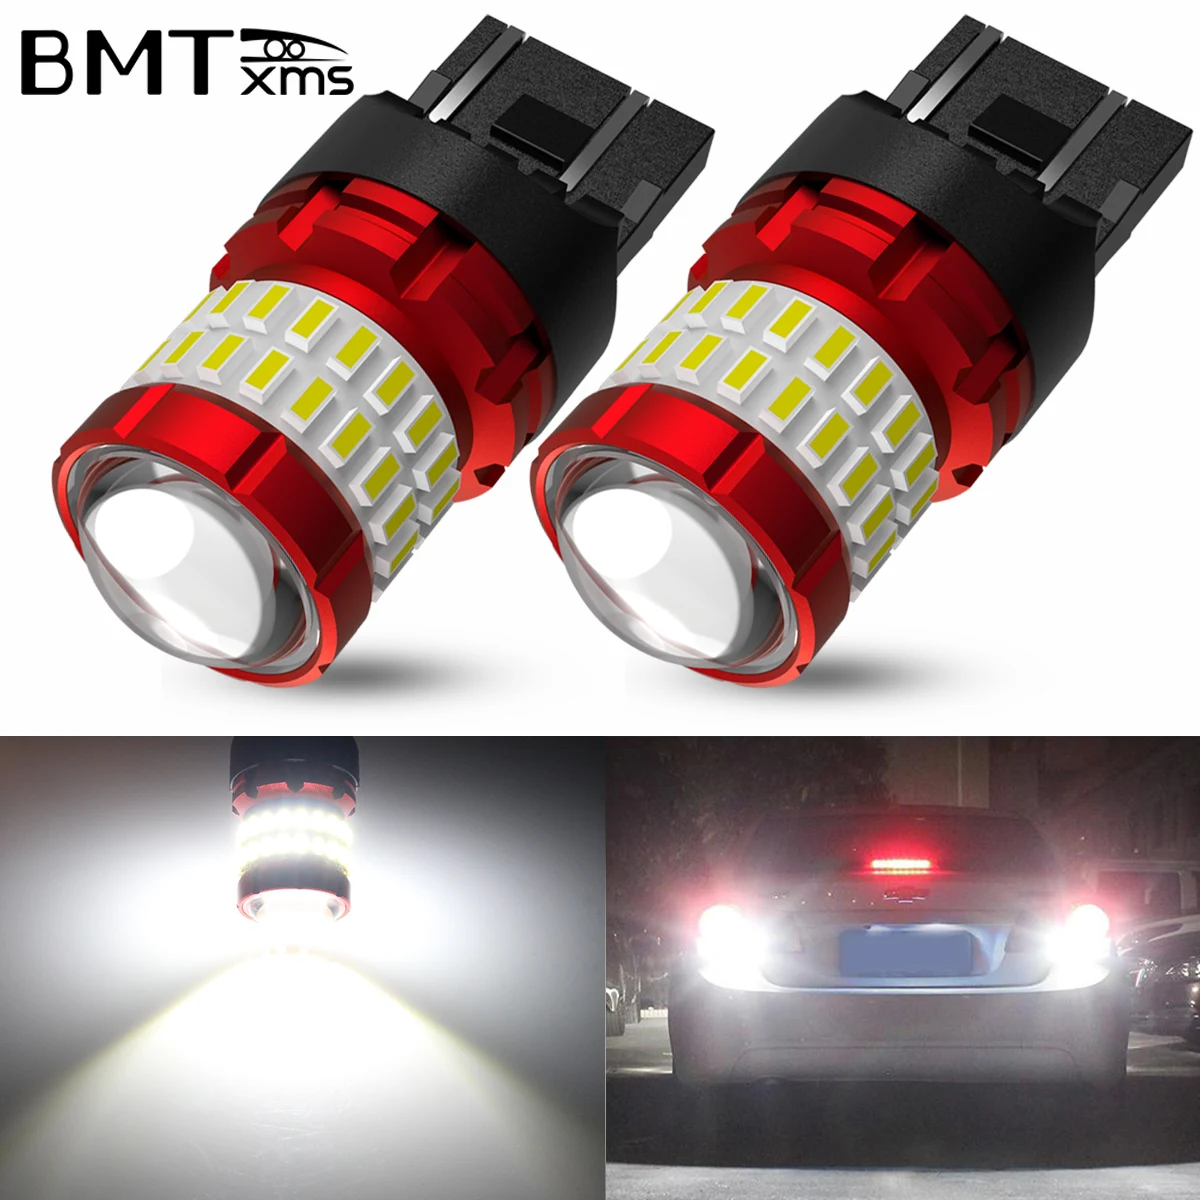 

BMTxms 2x T20 W21/5W 7443 Auto LED DRL Daytime Running Light For LADA Vesta Granta Kalina XRAY T10 W5W Car Backup Reserve Lamp